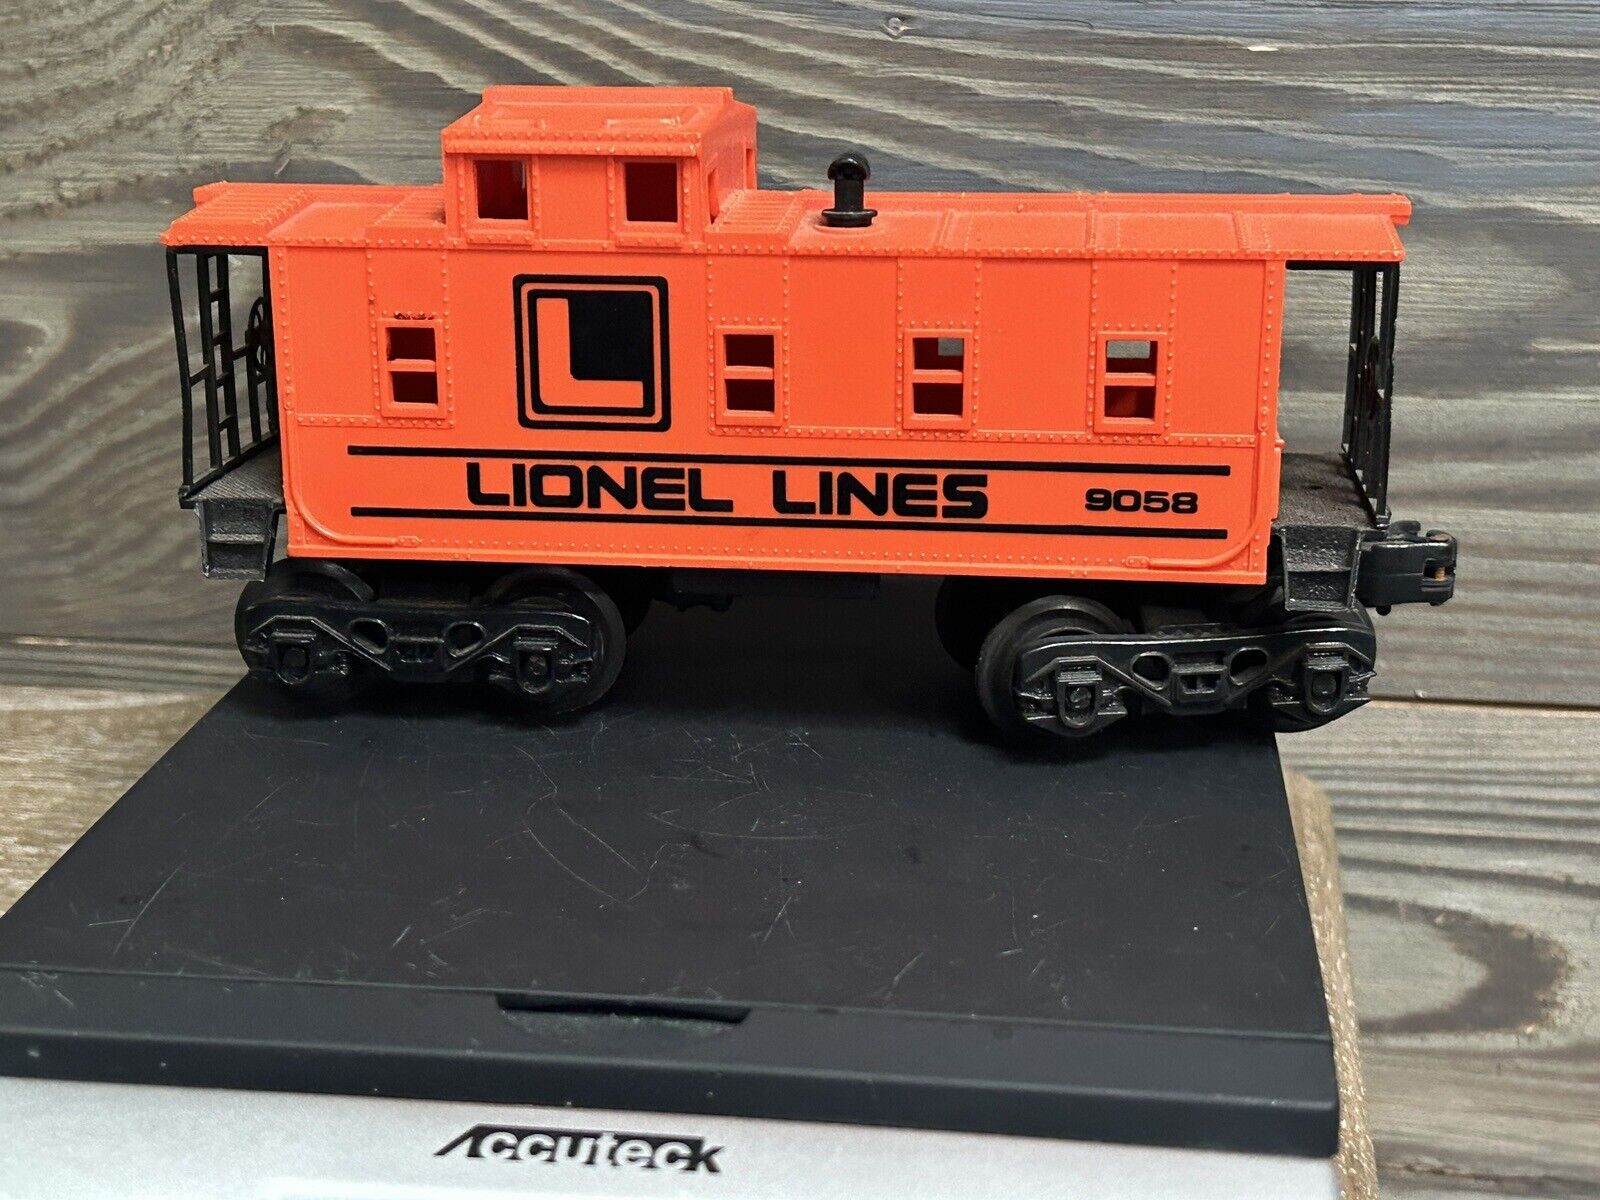 VTG Lionel Lines Orange Train 9059 Caboose Railroad Locomotive Toy Prop Hobby